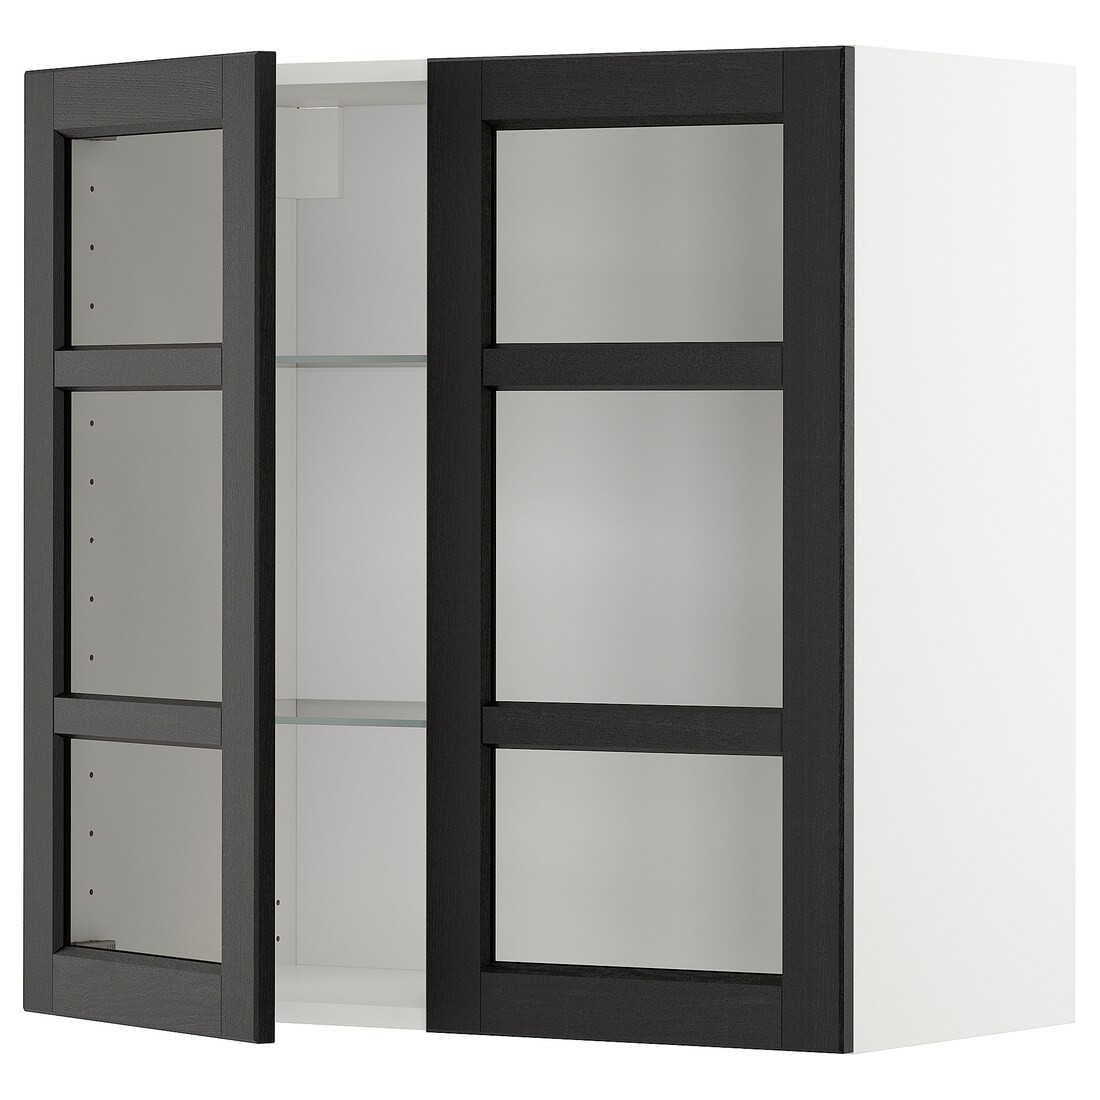 IKEA METOD МЕТОД Навесной шкаф, белый / Lerhyttan черная морилка, 80x80 см 29456136 | 294.561.36